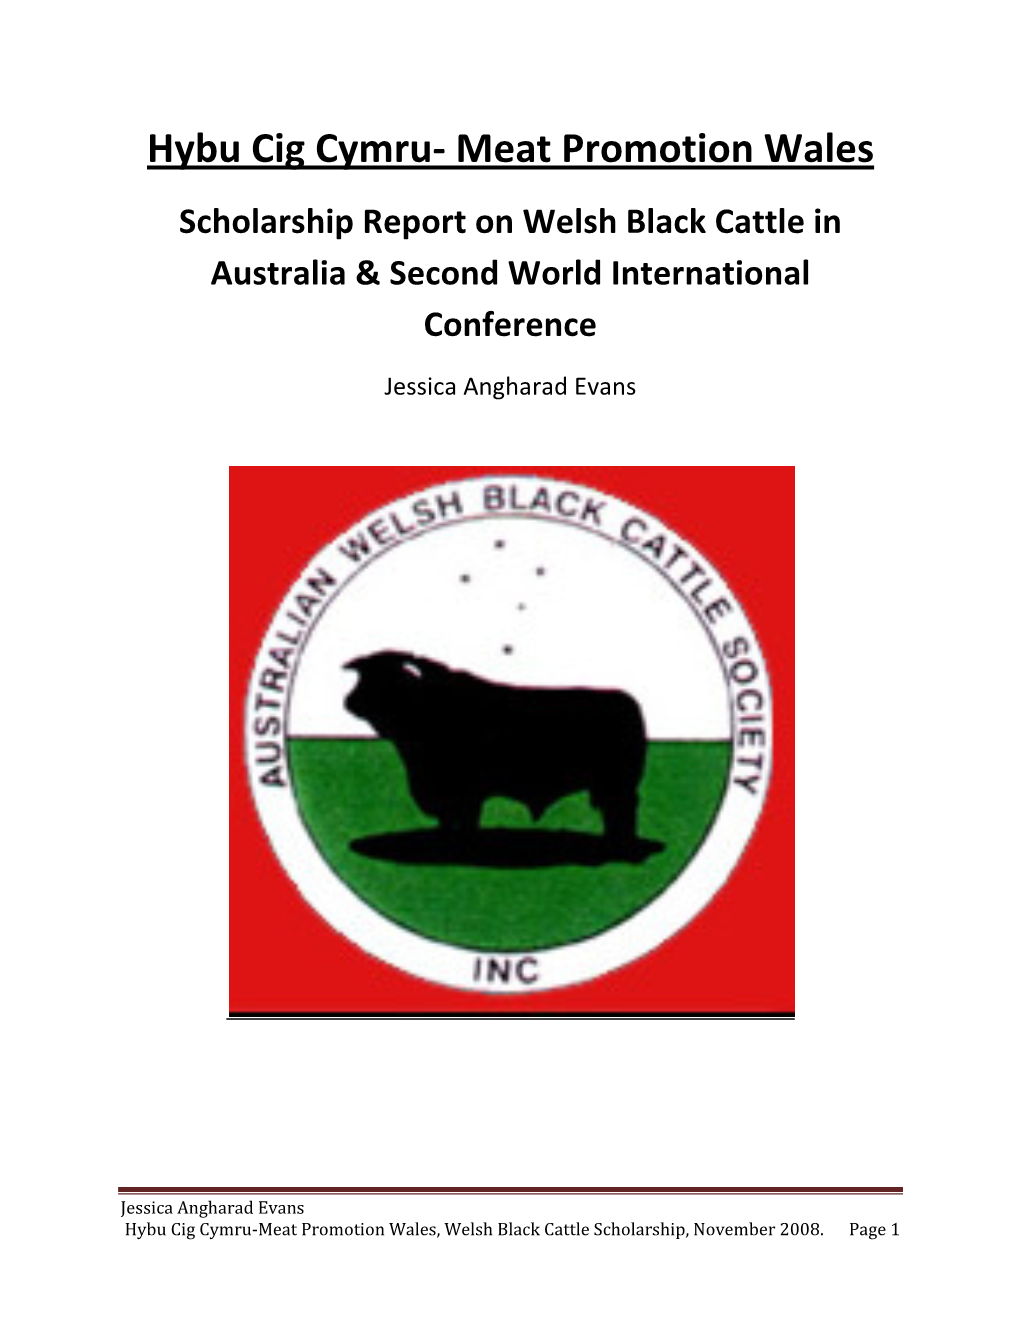 Hybu Cig Cymru- Meat Promotion Wales Scholarship Report on Welsh Black Cattle in Australia & Second World International Conference